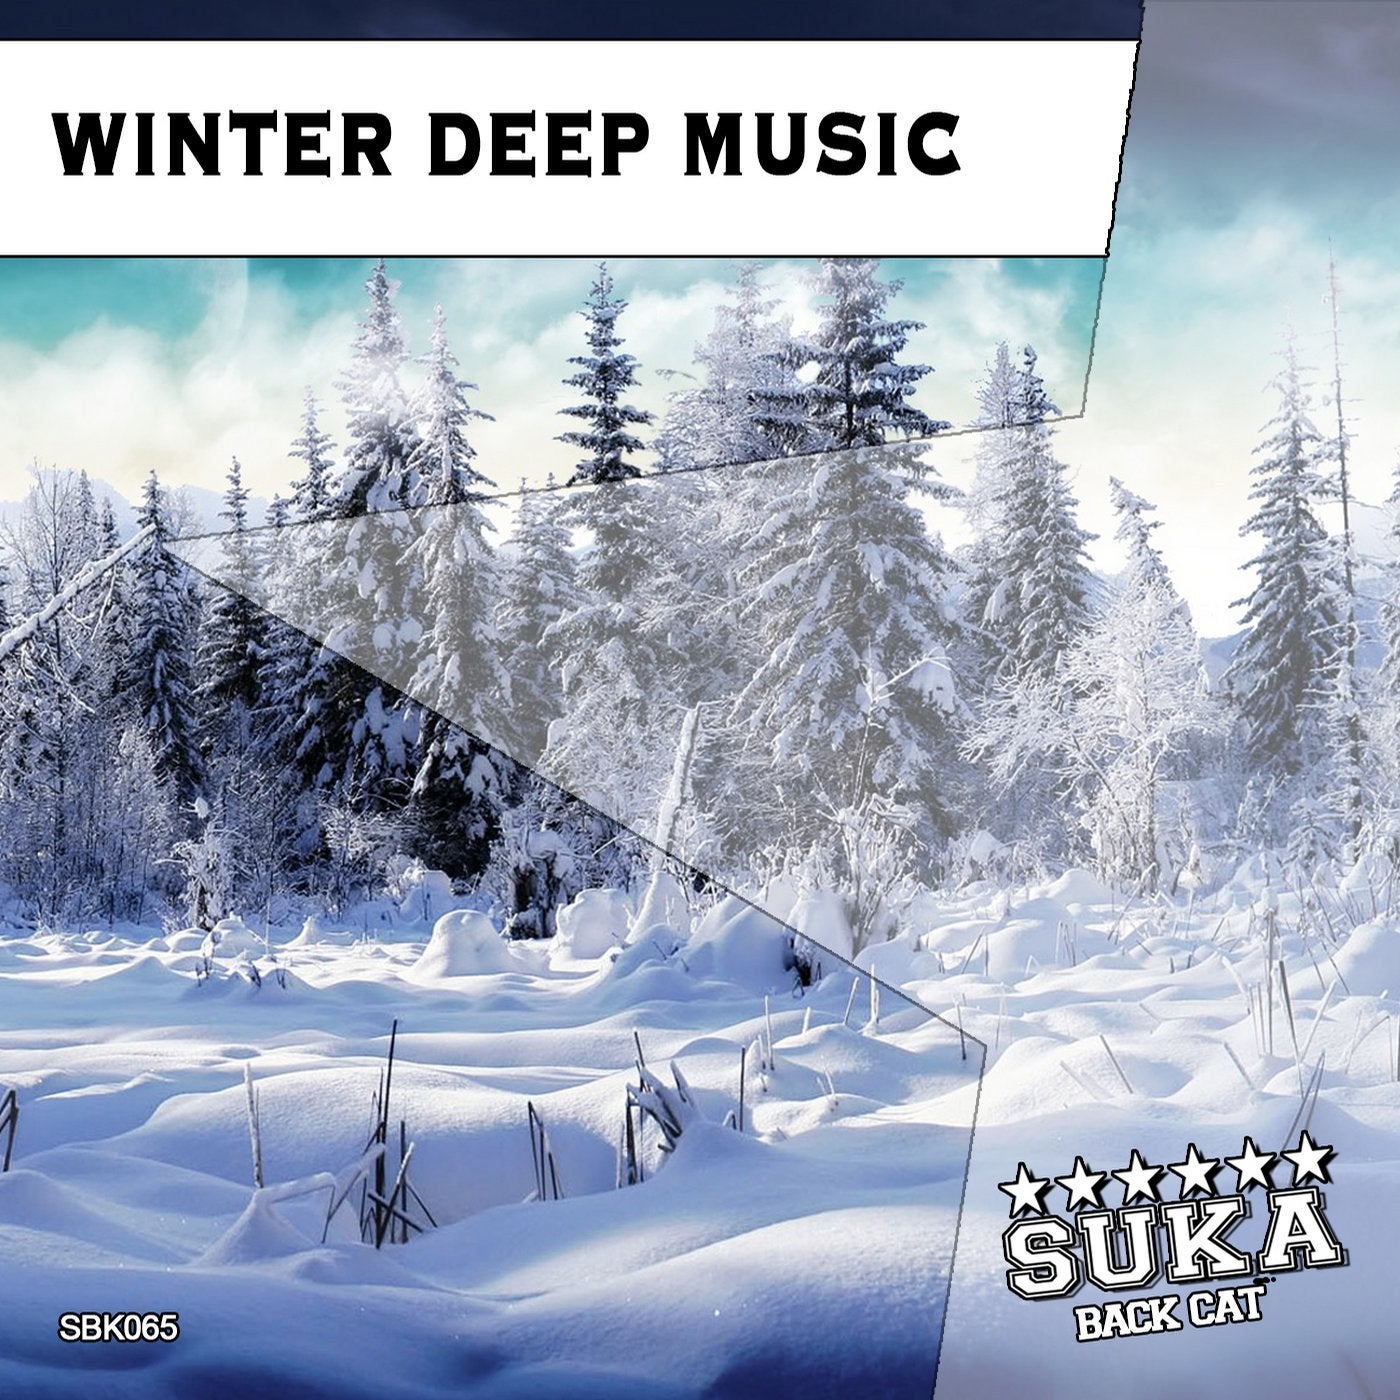 Winter Deep Music